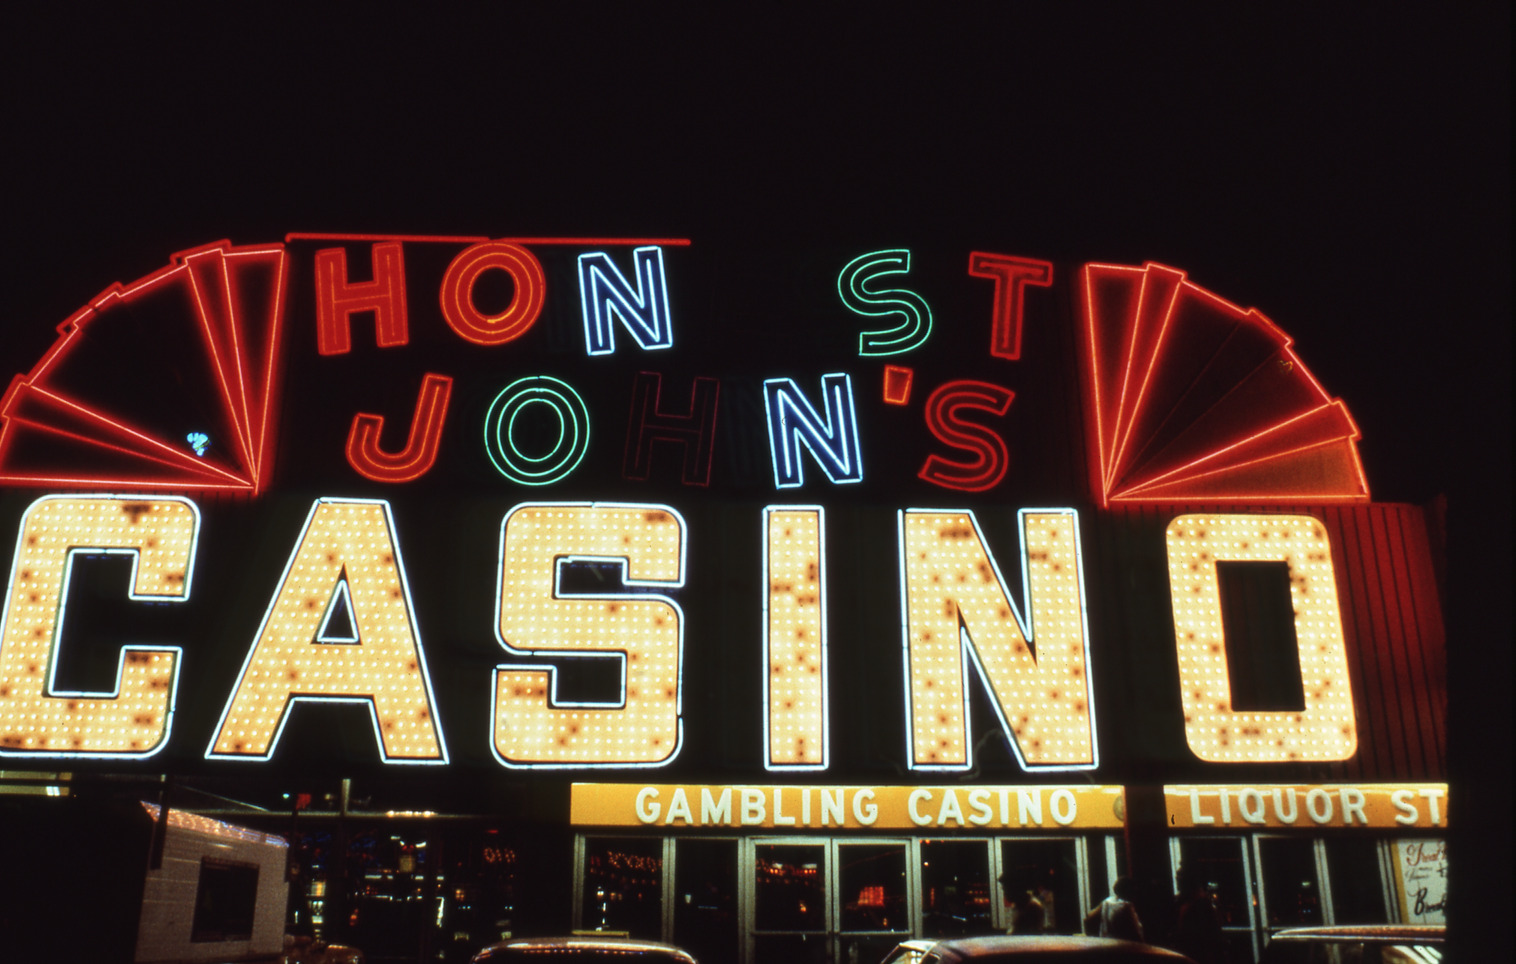 Honest John's Casino wall mounted sign, Las Vegas, Nevada: photographic print